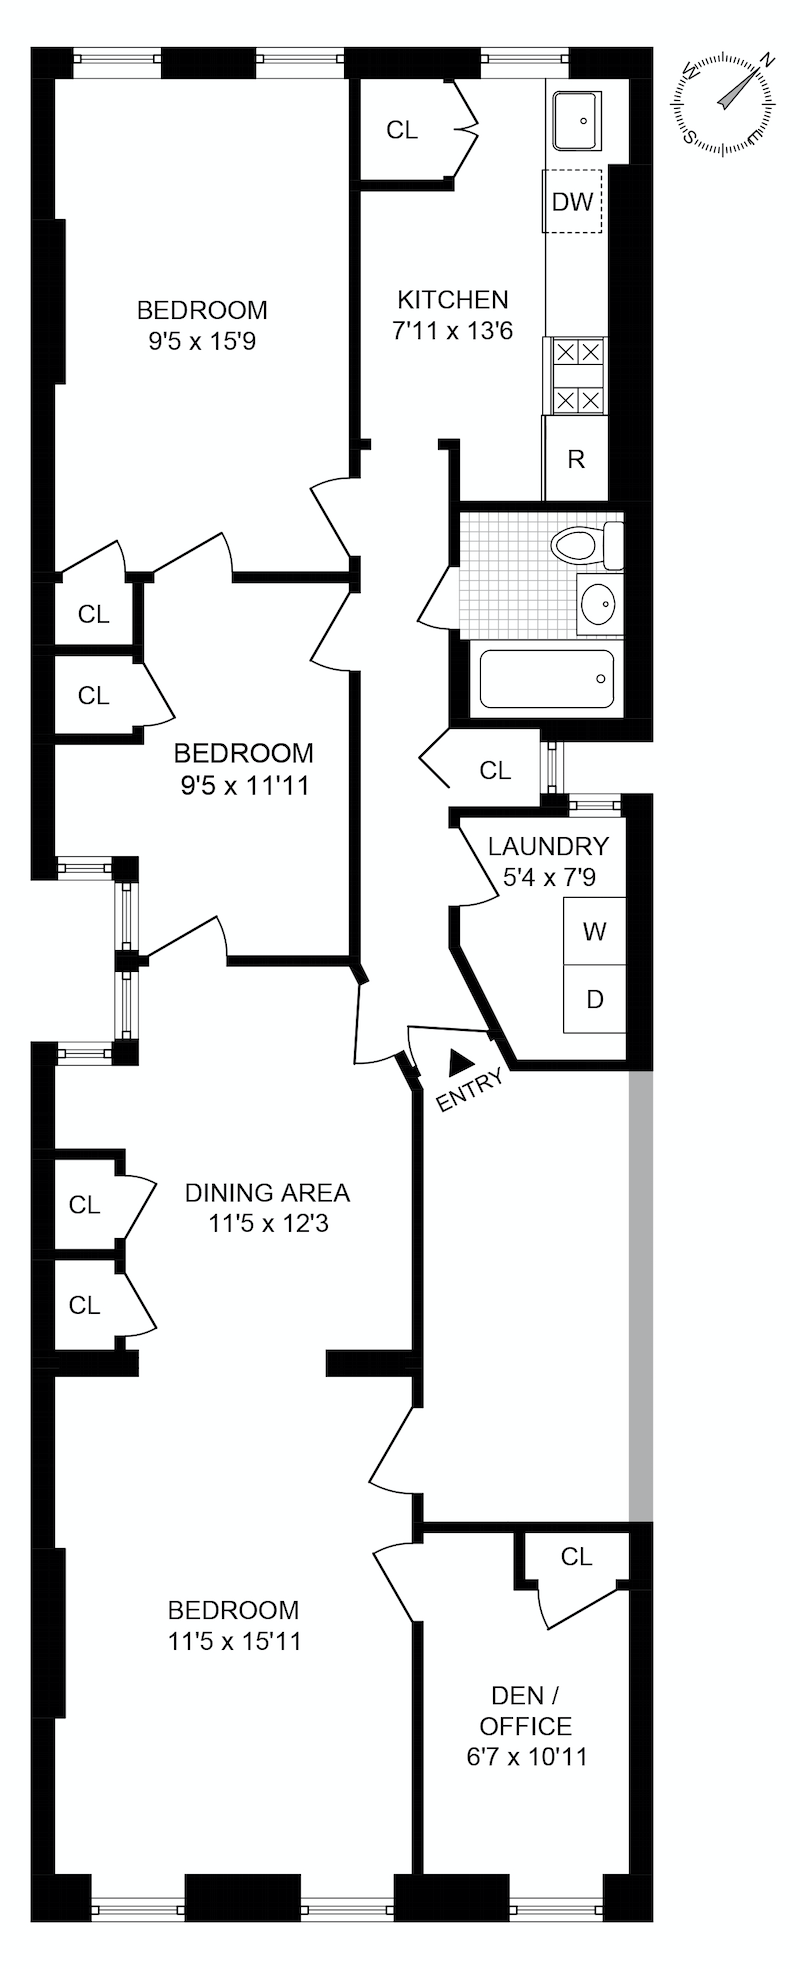 Floorplan for 144 7th Avenue, 2